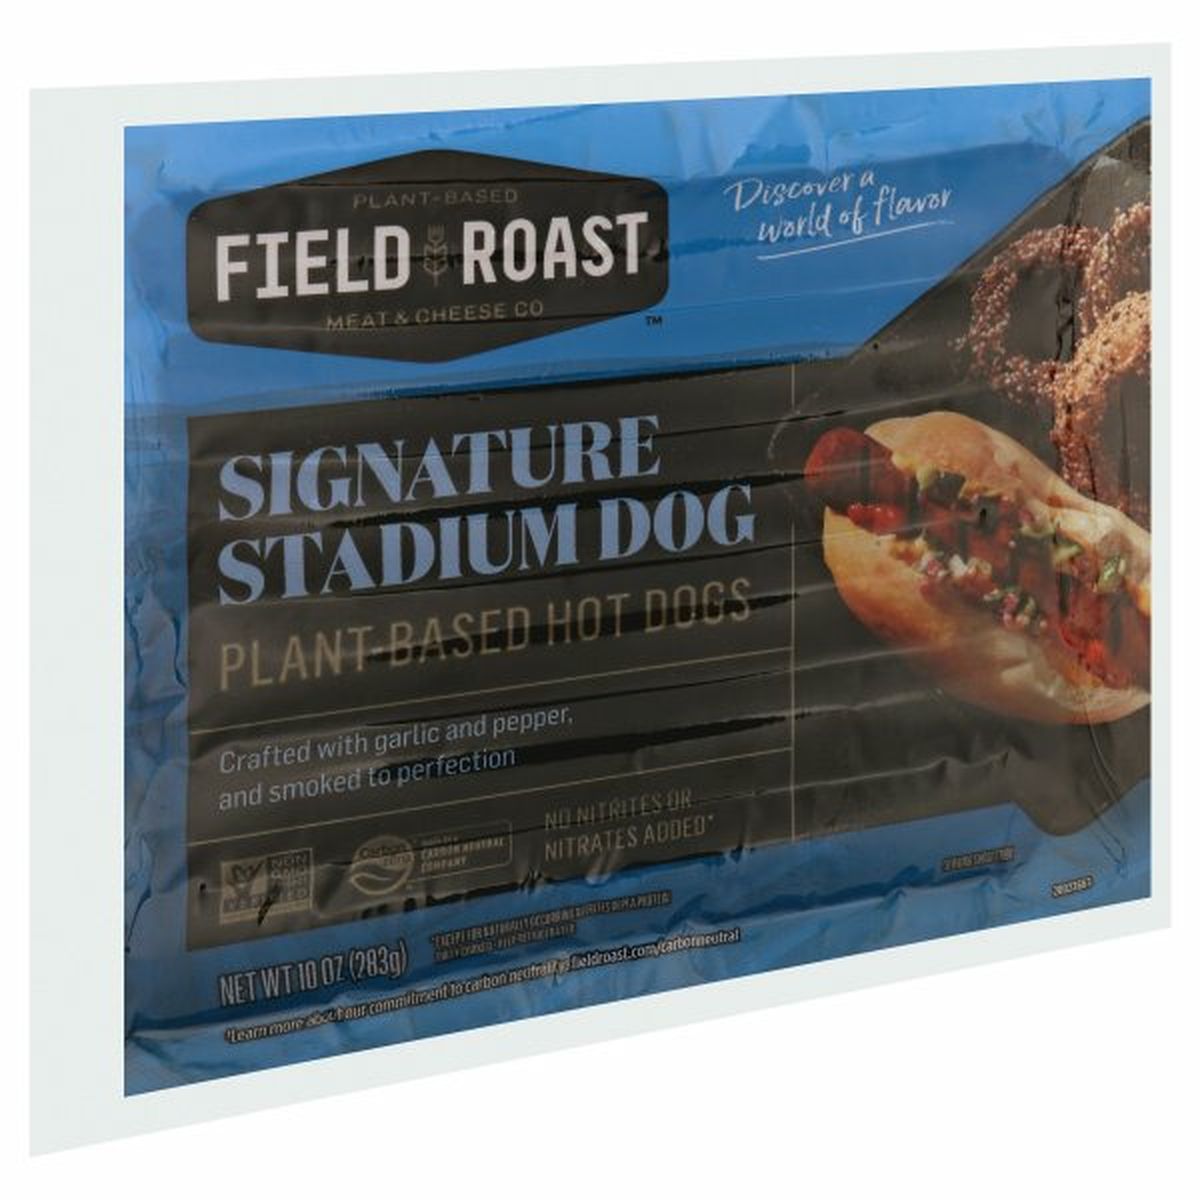 Calories in Field Roast Hot Dogs, Signature Stadium Dog, Plant-Based